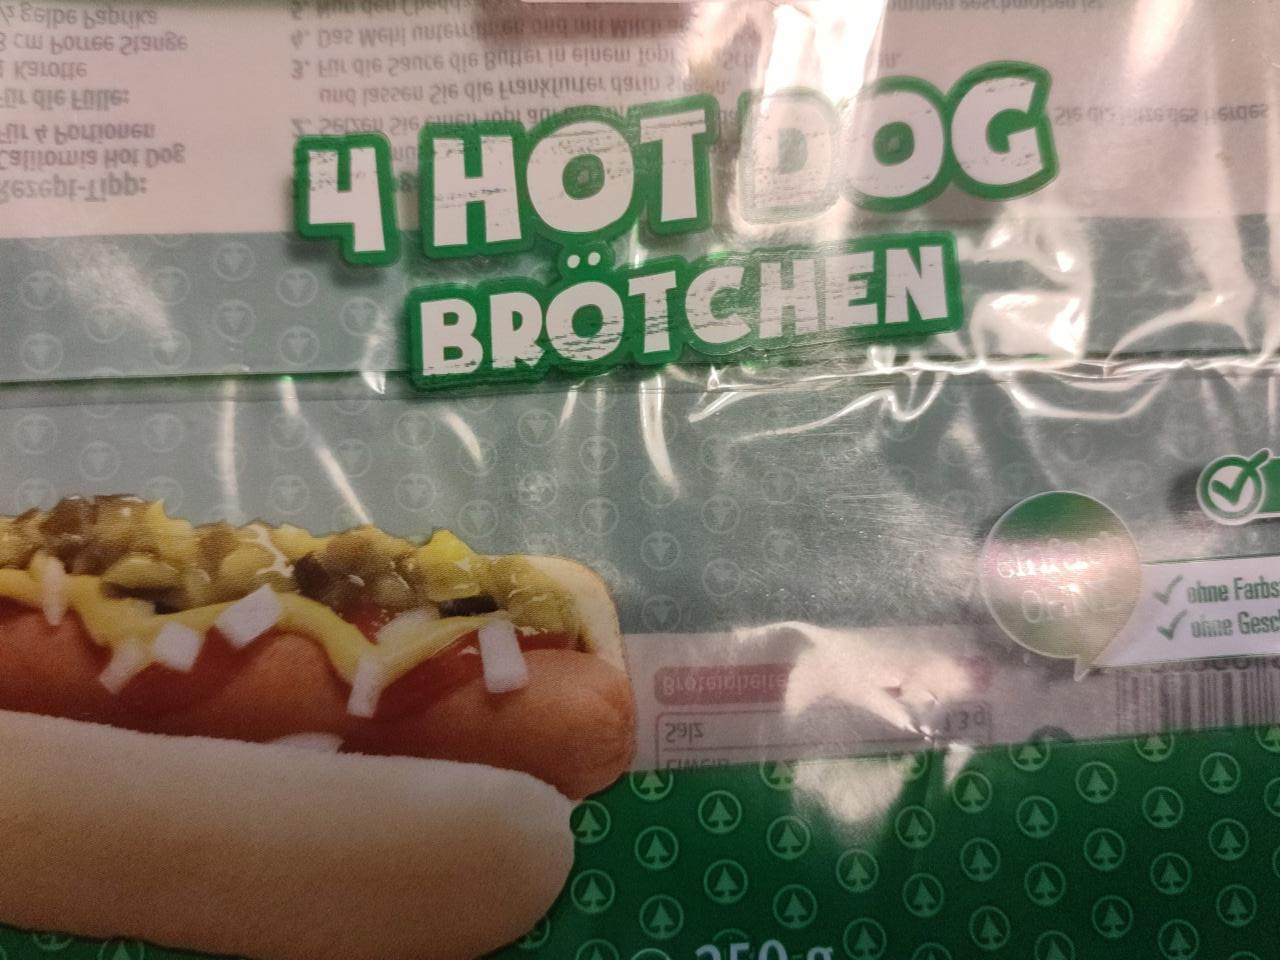 Fotografie - hot-dog brötchen